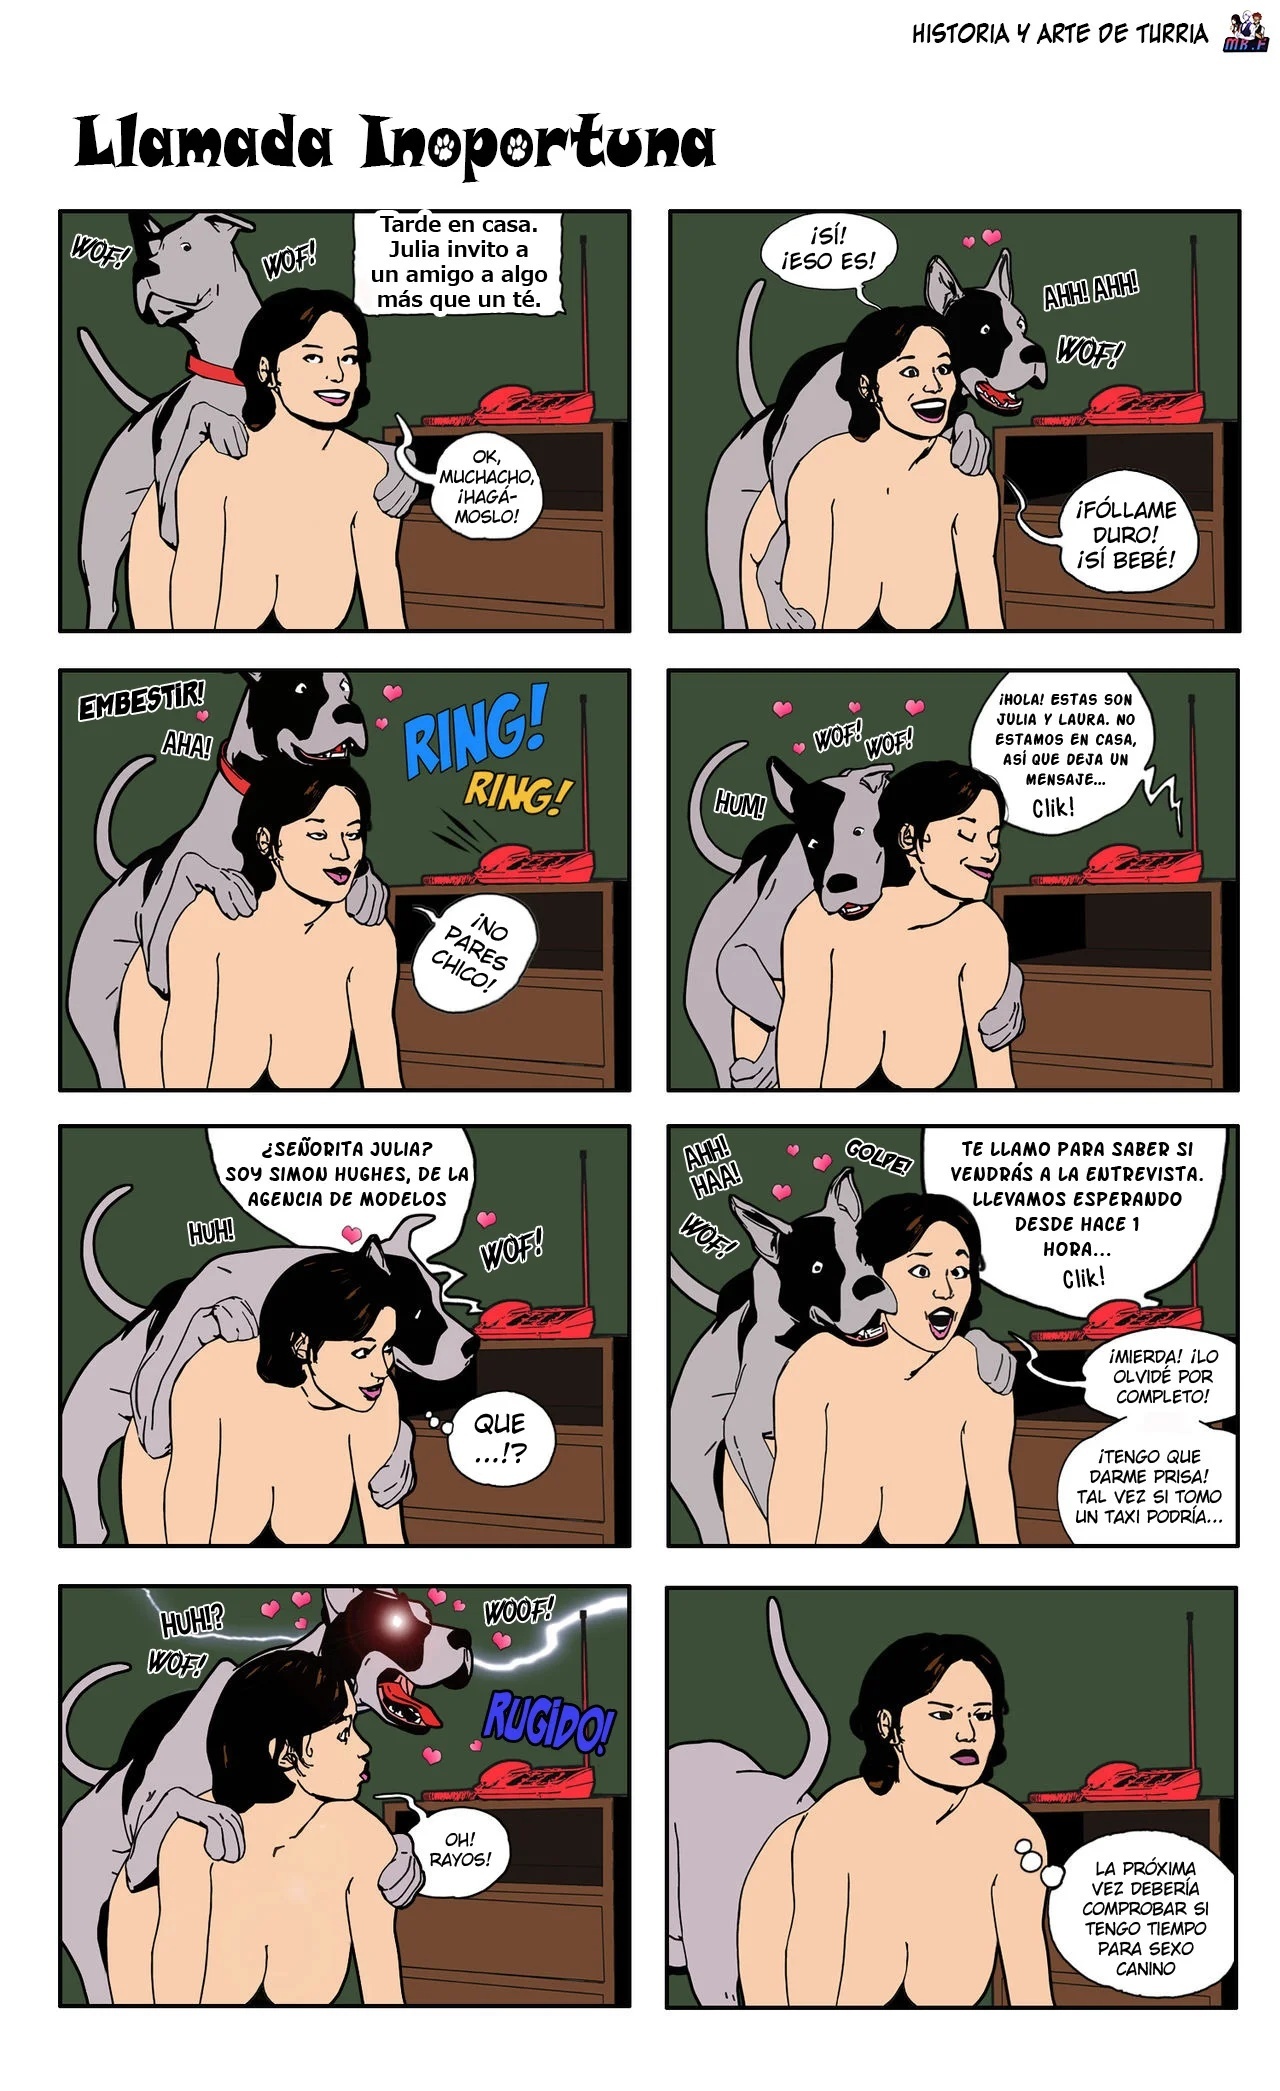 New Comic Strips (dog) _ Nuevas Tiras Comicas (Perro) - 1